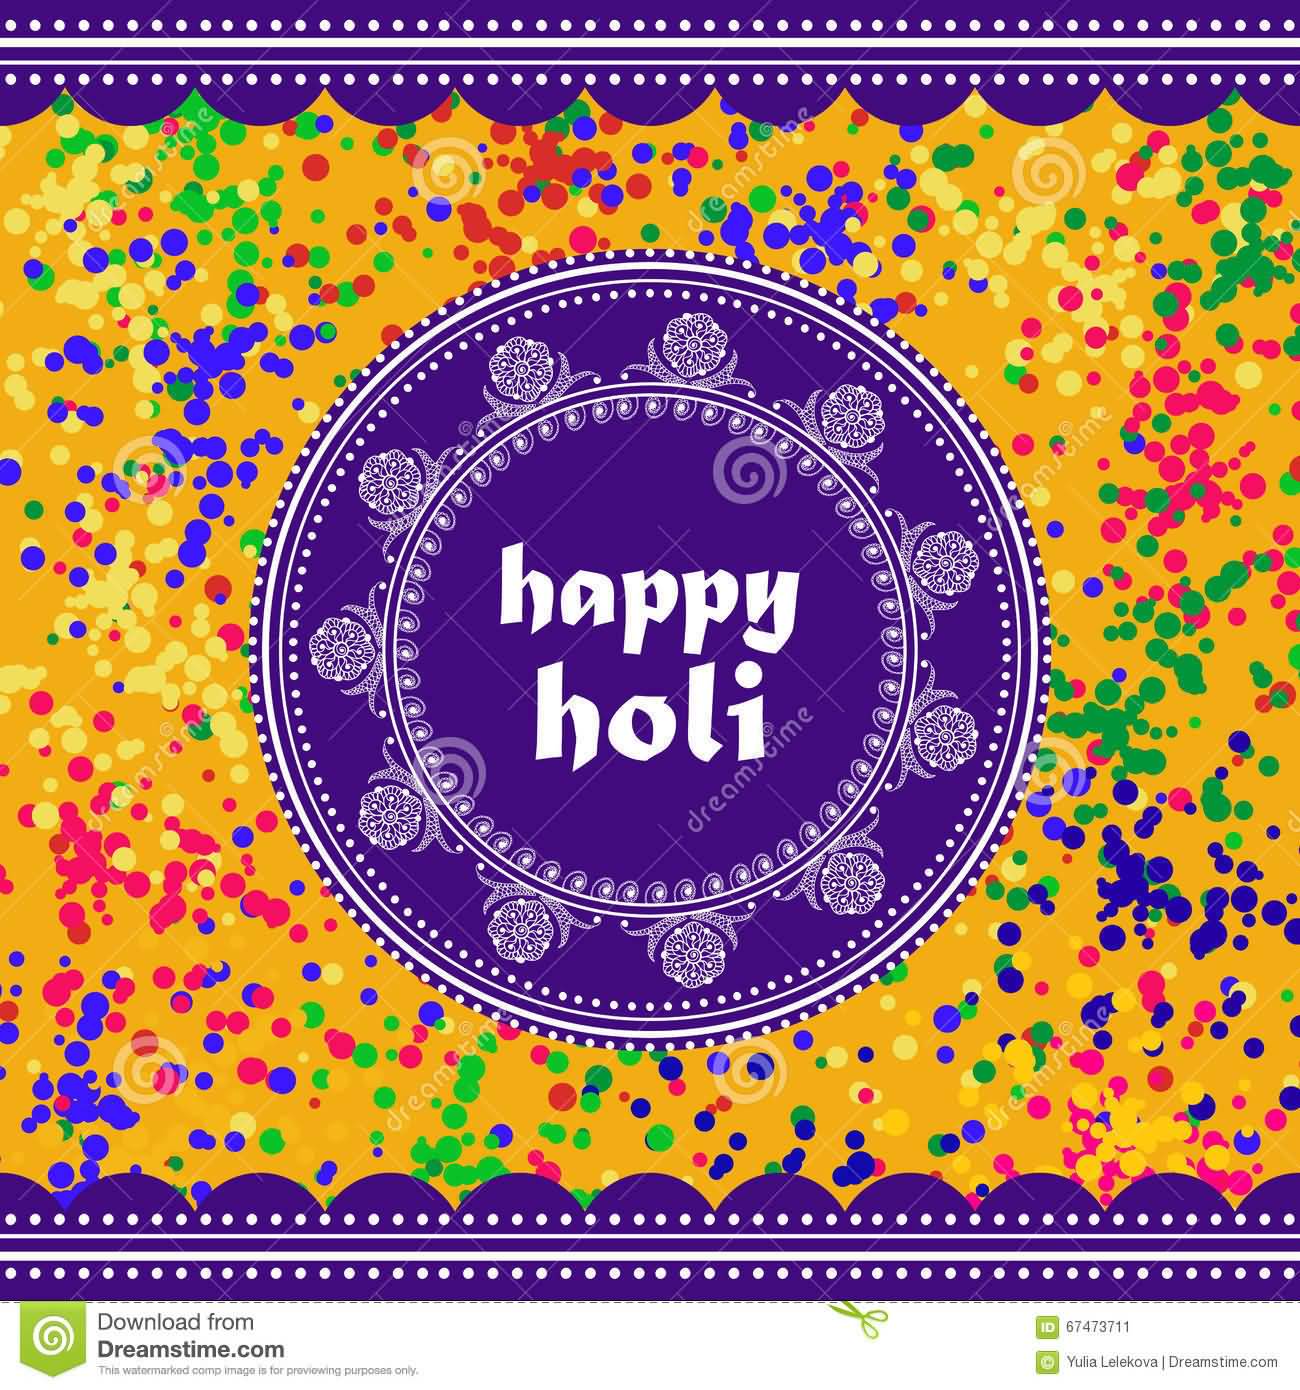 Happy Holi 2017 Greeting Card